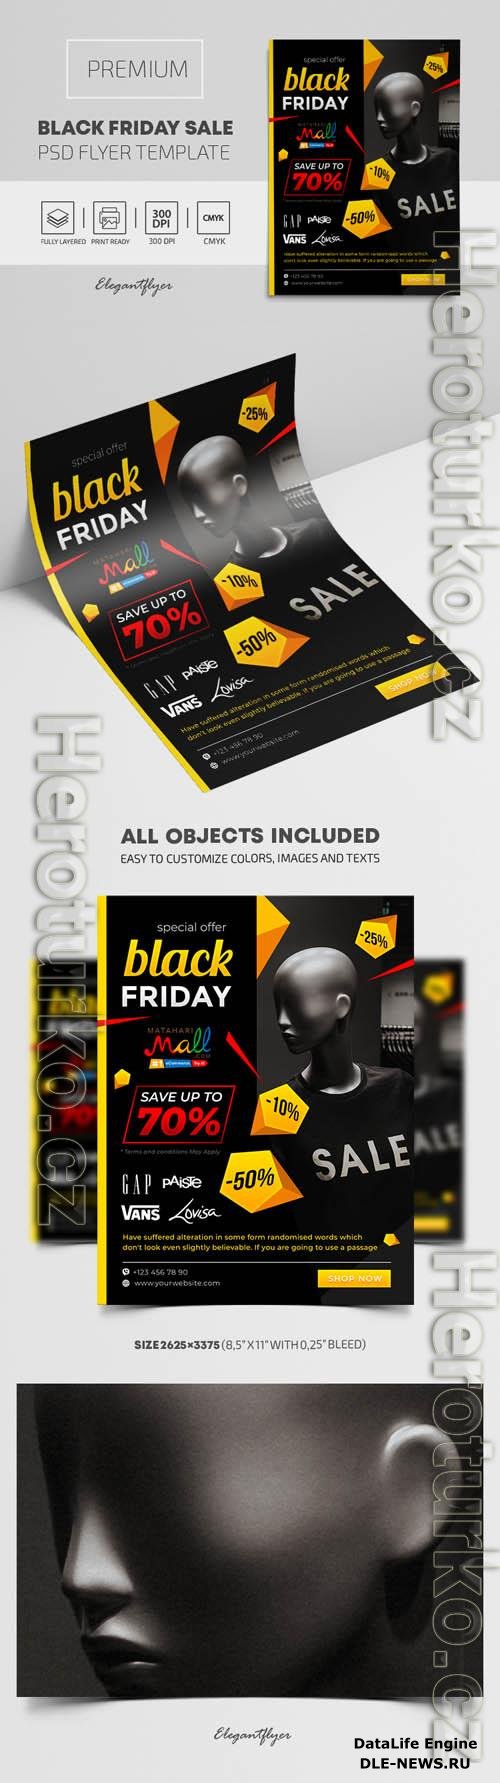 Black Friday Sales  Premium PSD Flyer Template